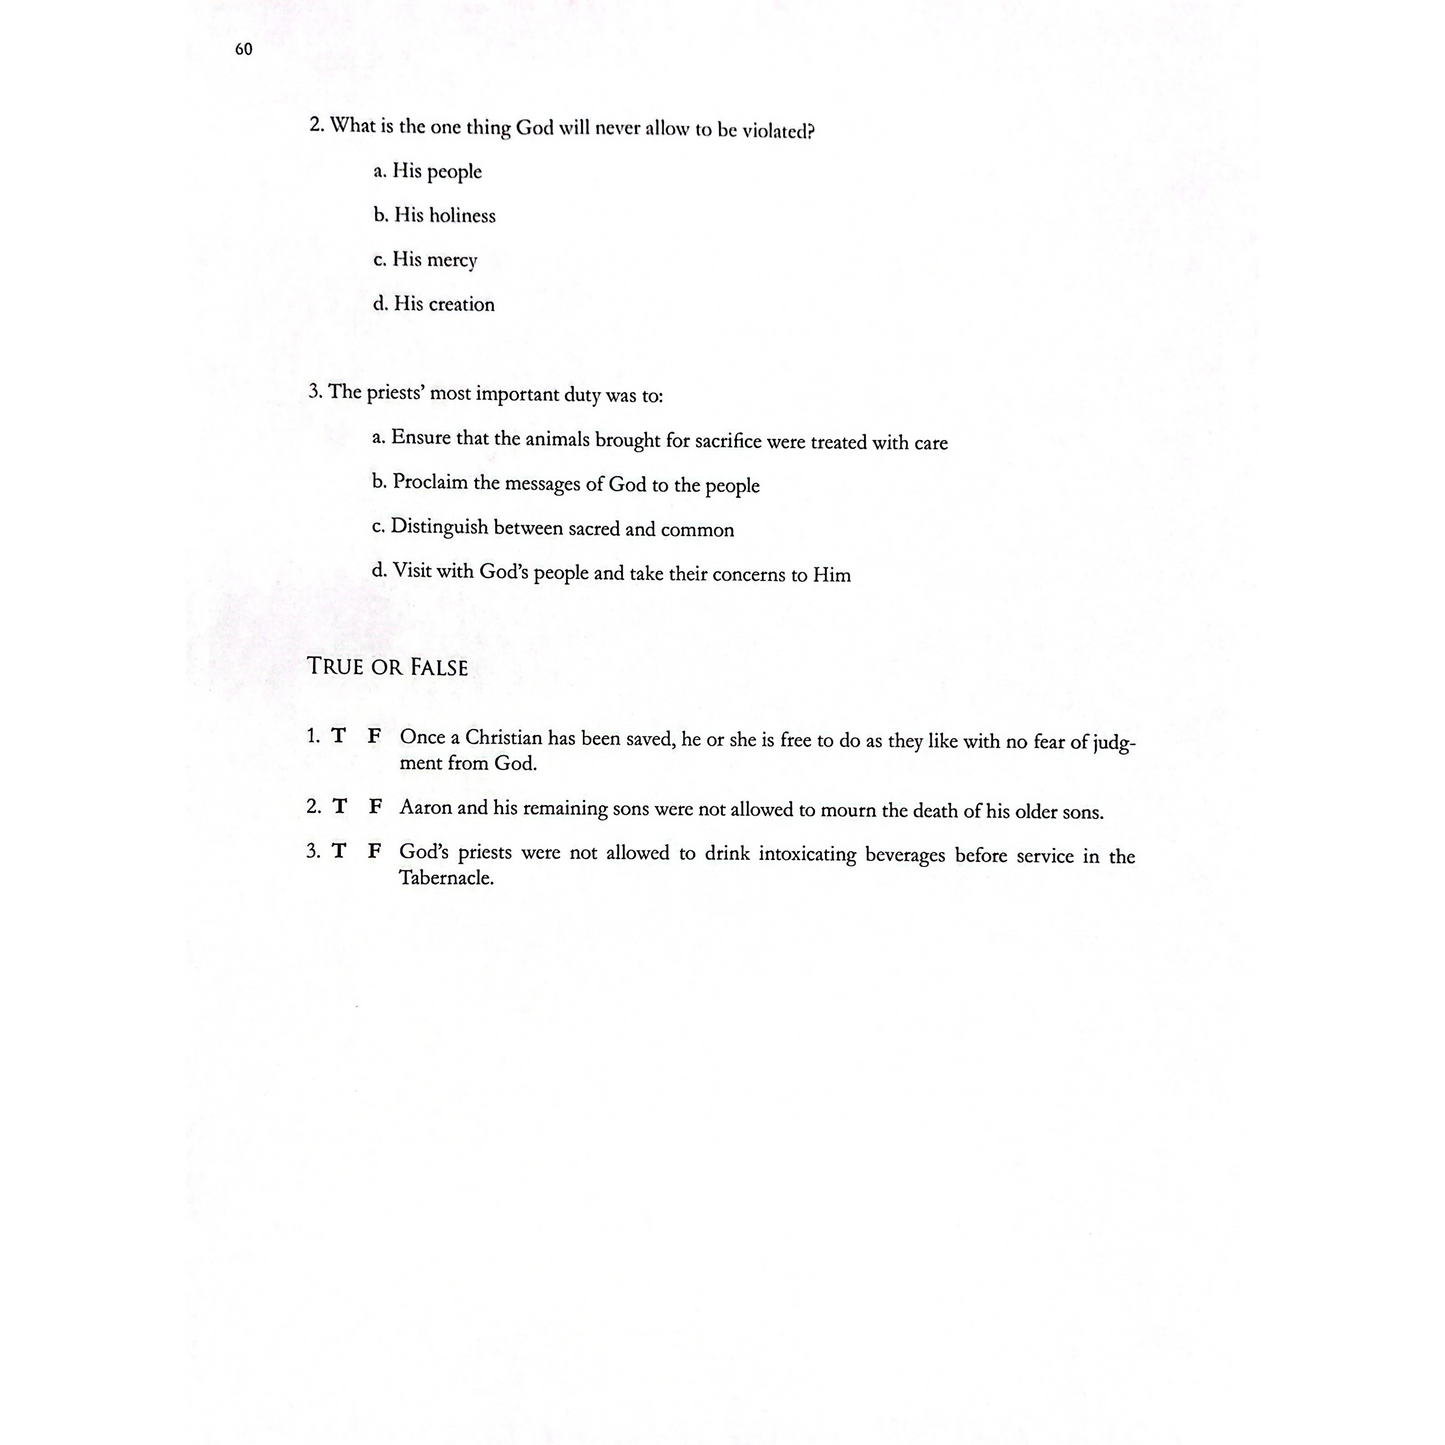 Leviticus Homeschool Teacher's Guide (iPad, Epub)